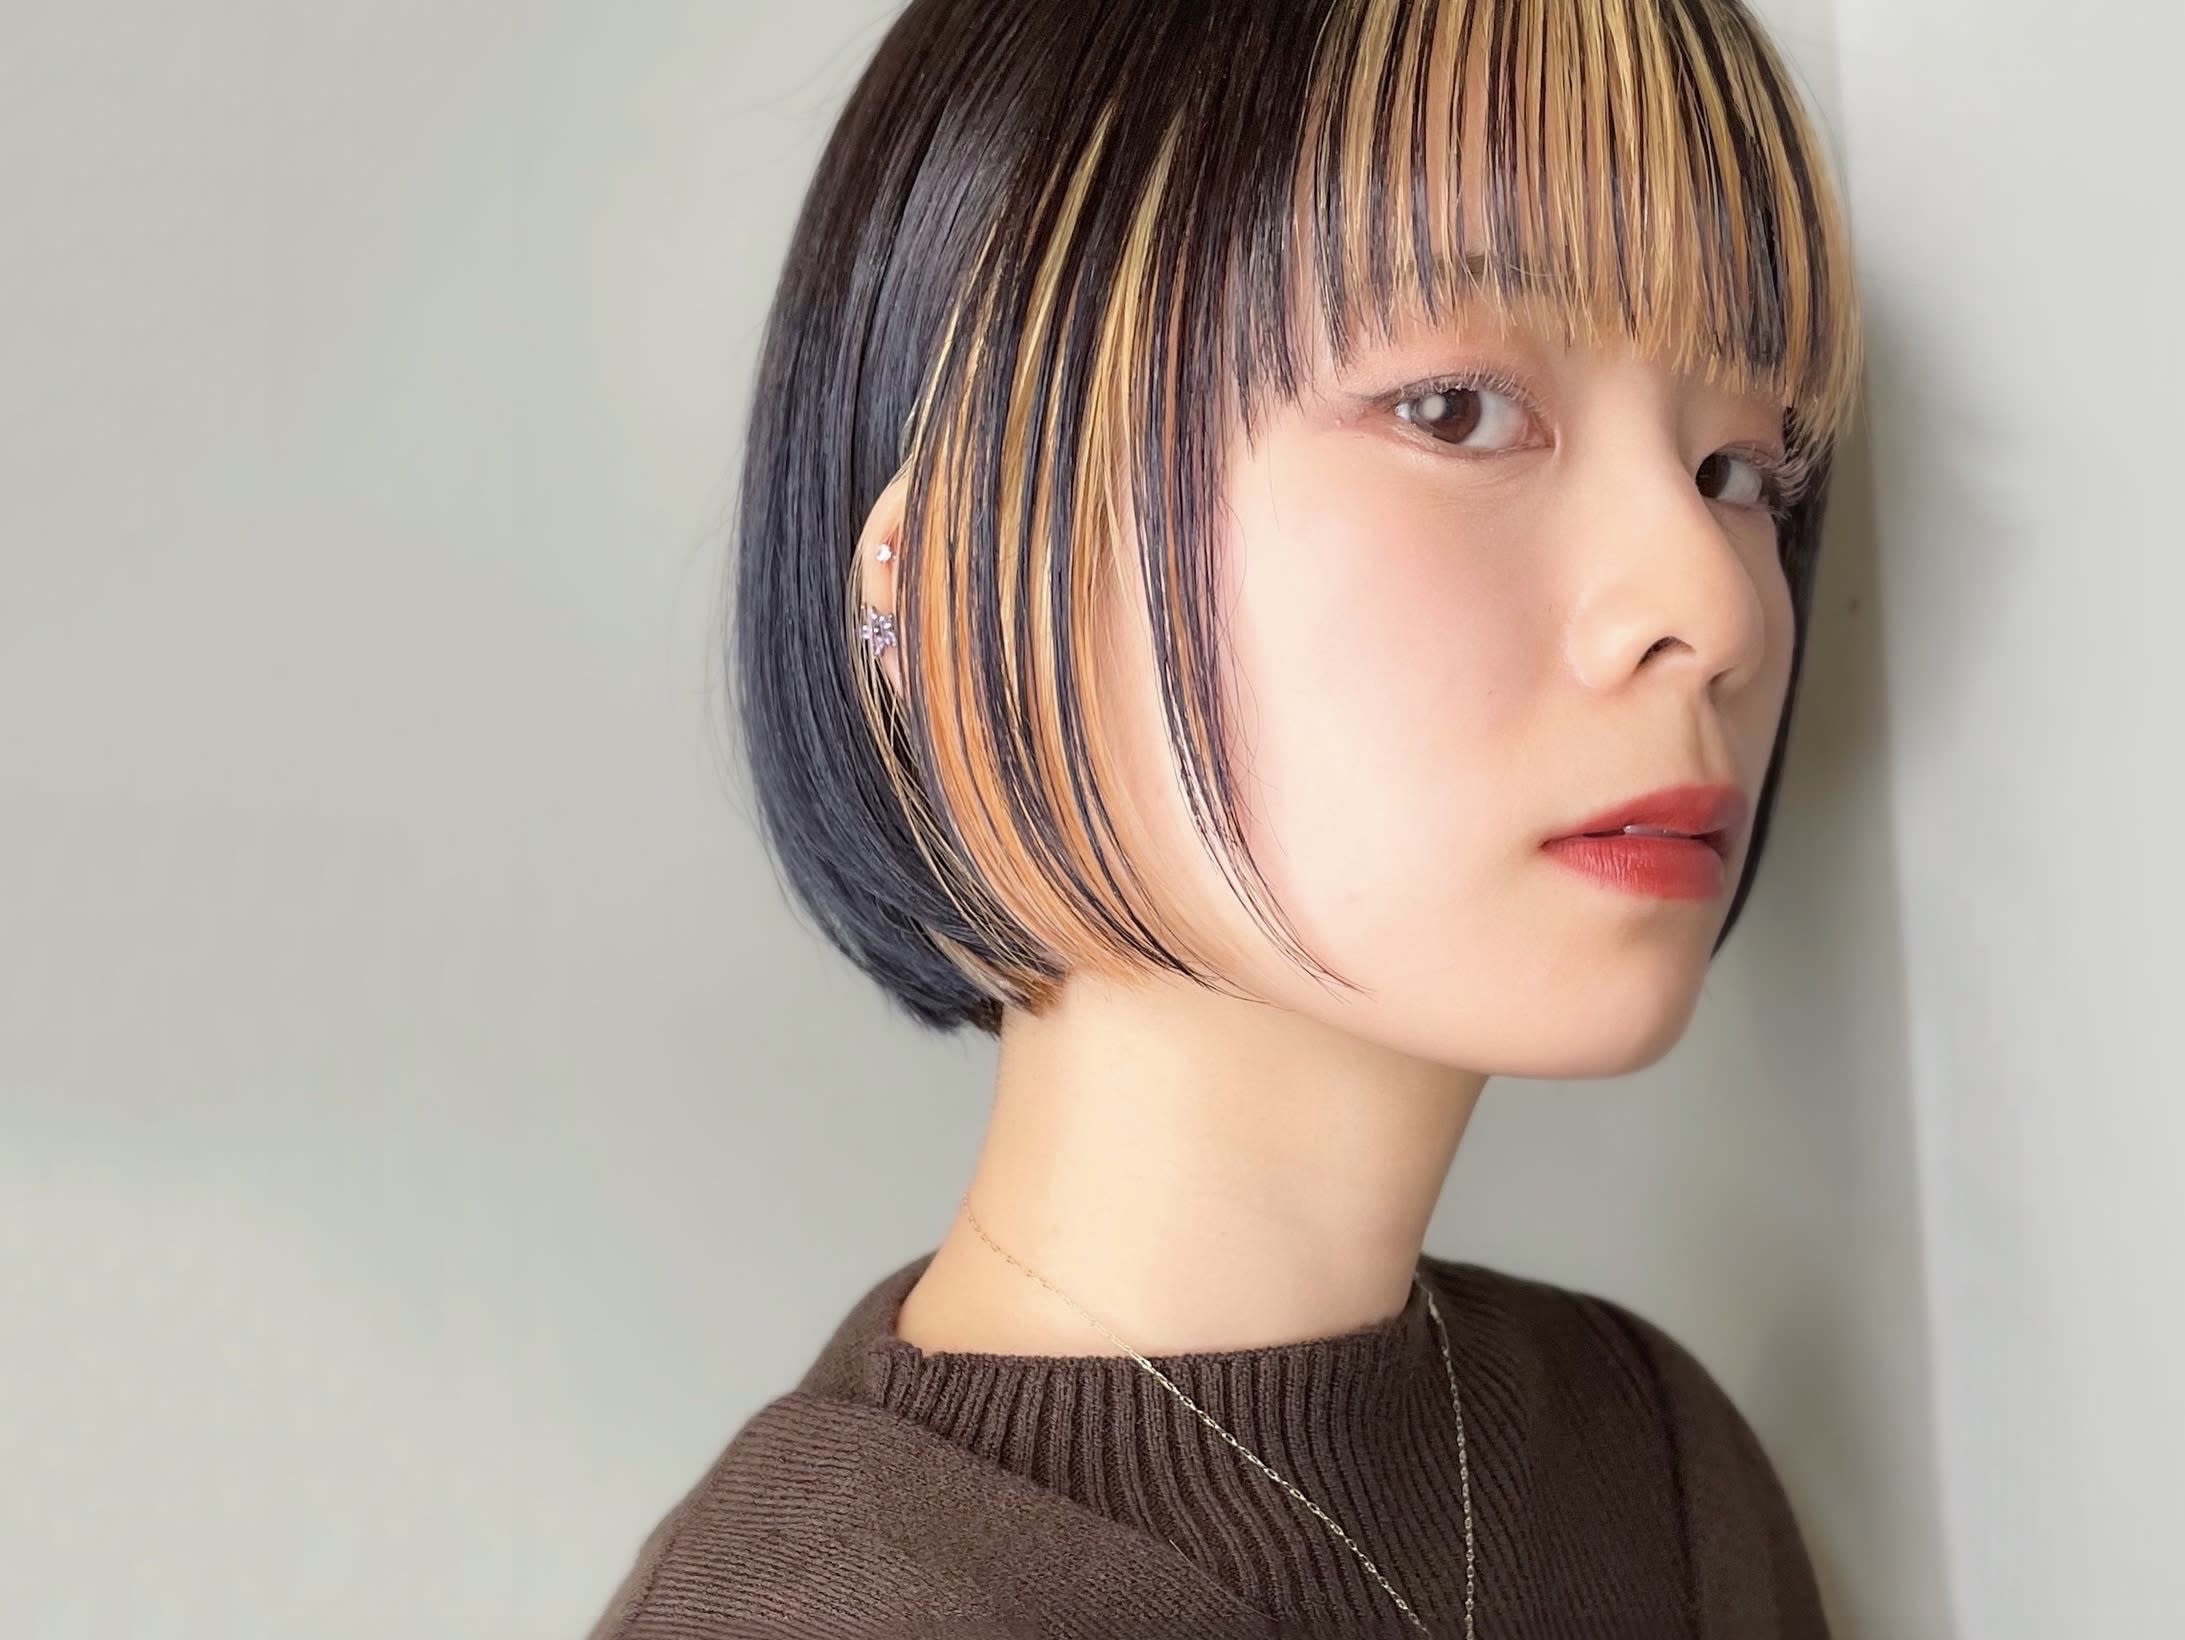 MEIKA 札幌大通り 『カット、髪質改善、デザインカラー』【メイカ】のスタイル紹介。『リアルスナップ』